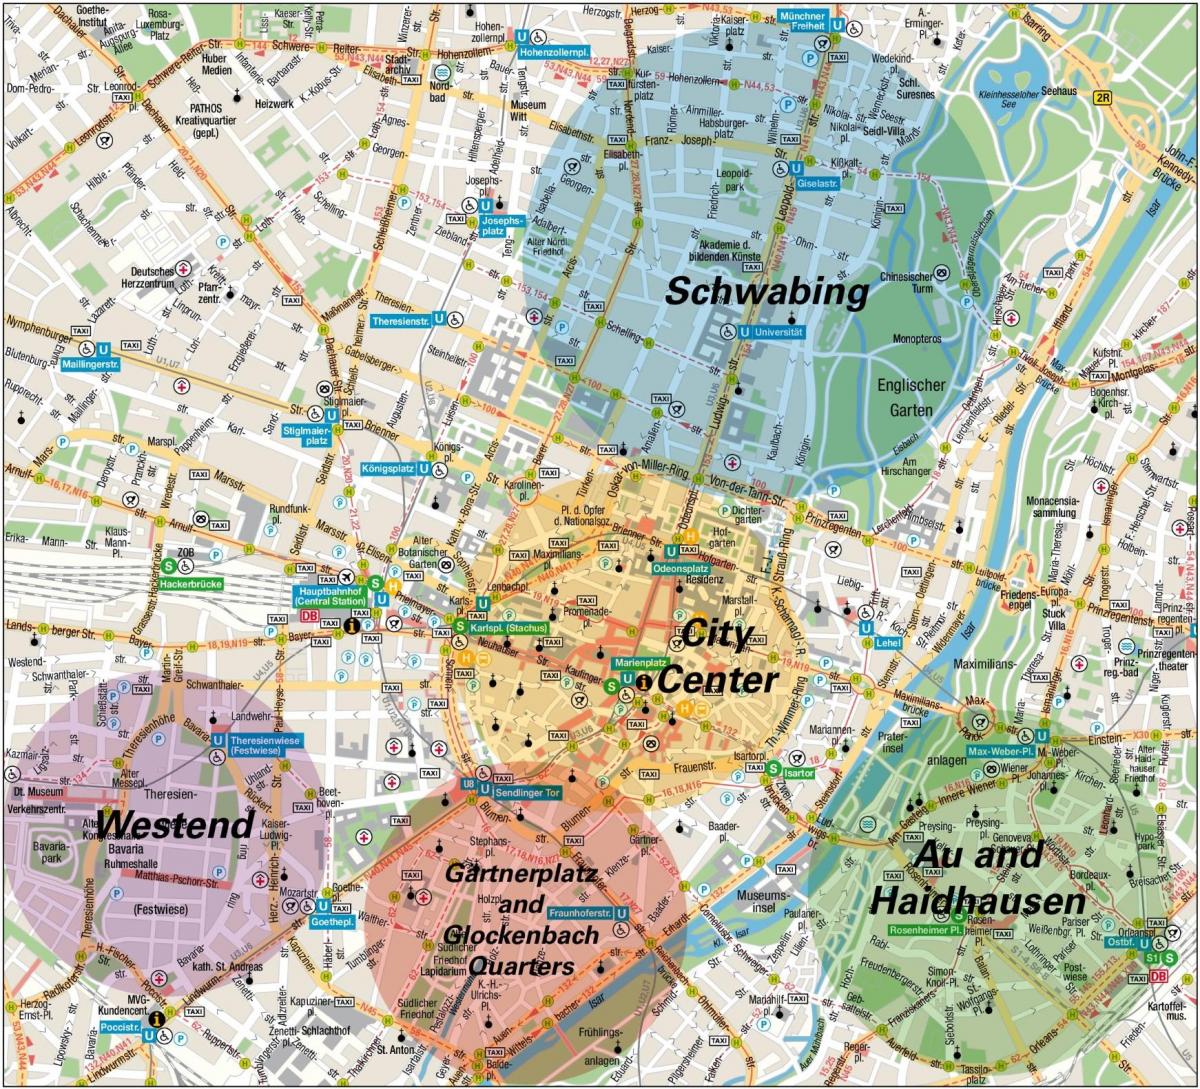 Mapa dos bairros de Munique